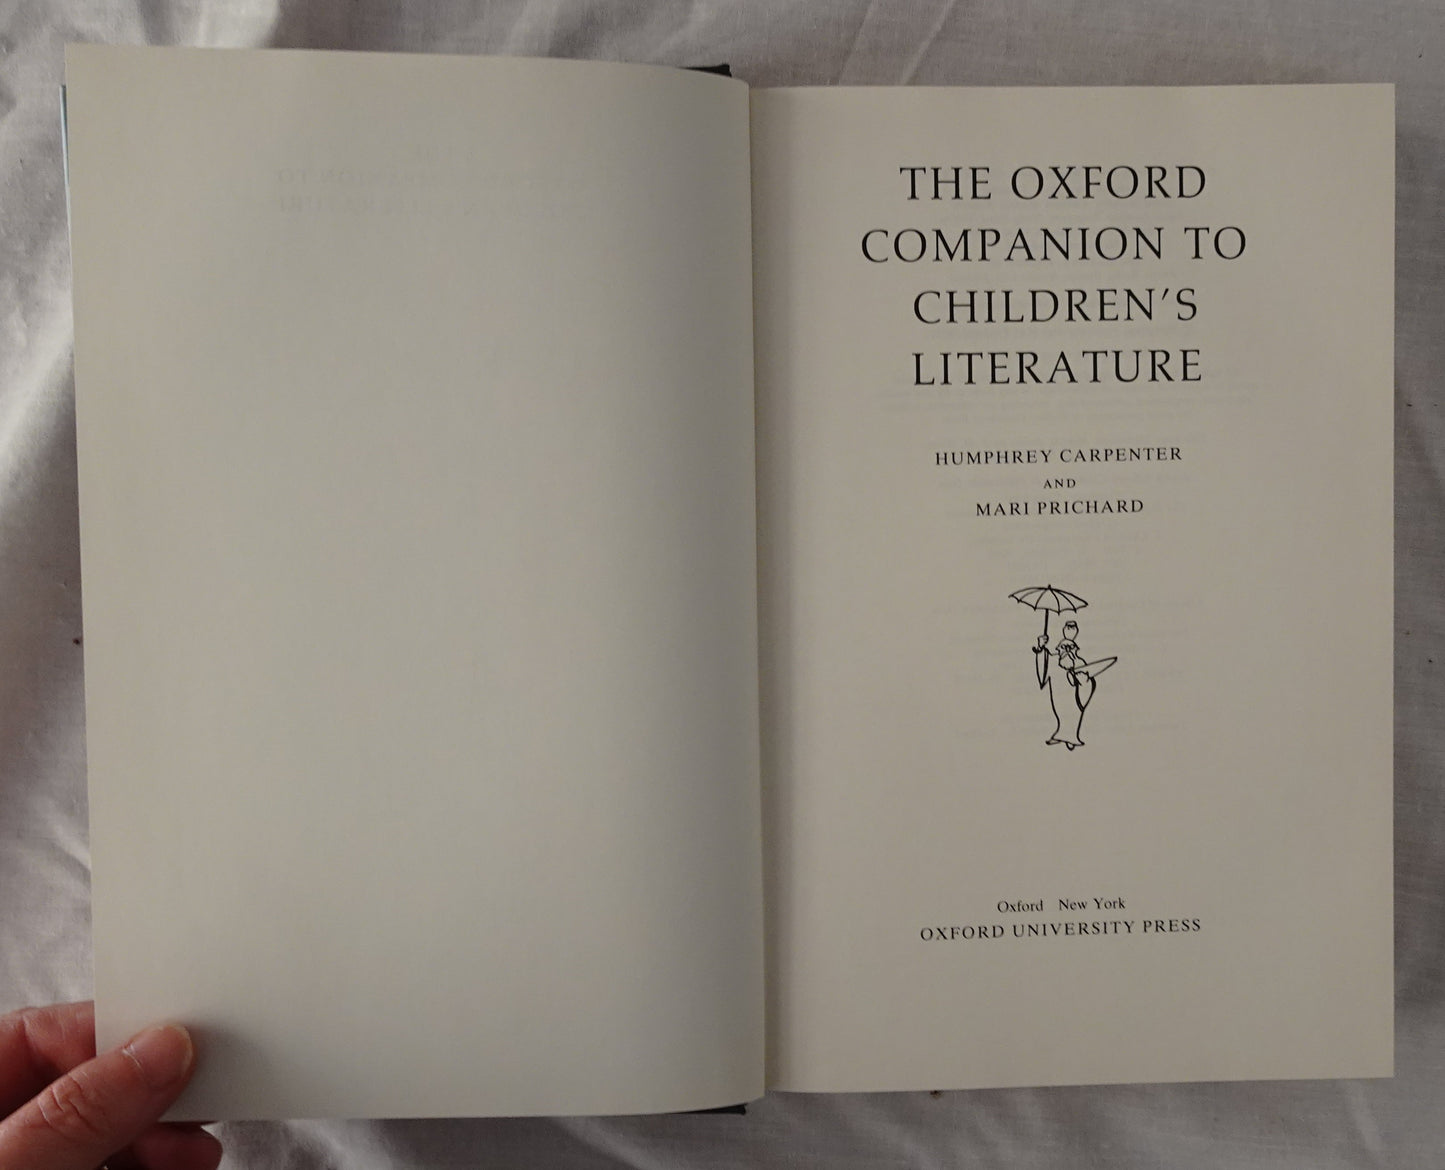 The Oxford Companion to Children’s Literature by Humphrey Carpenter and Mari Prichard